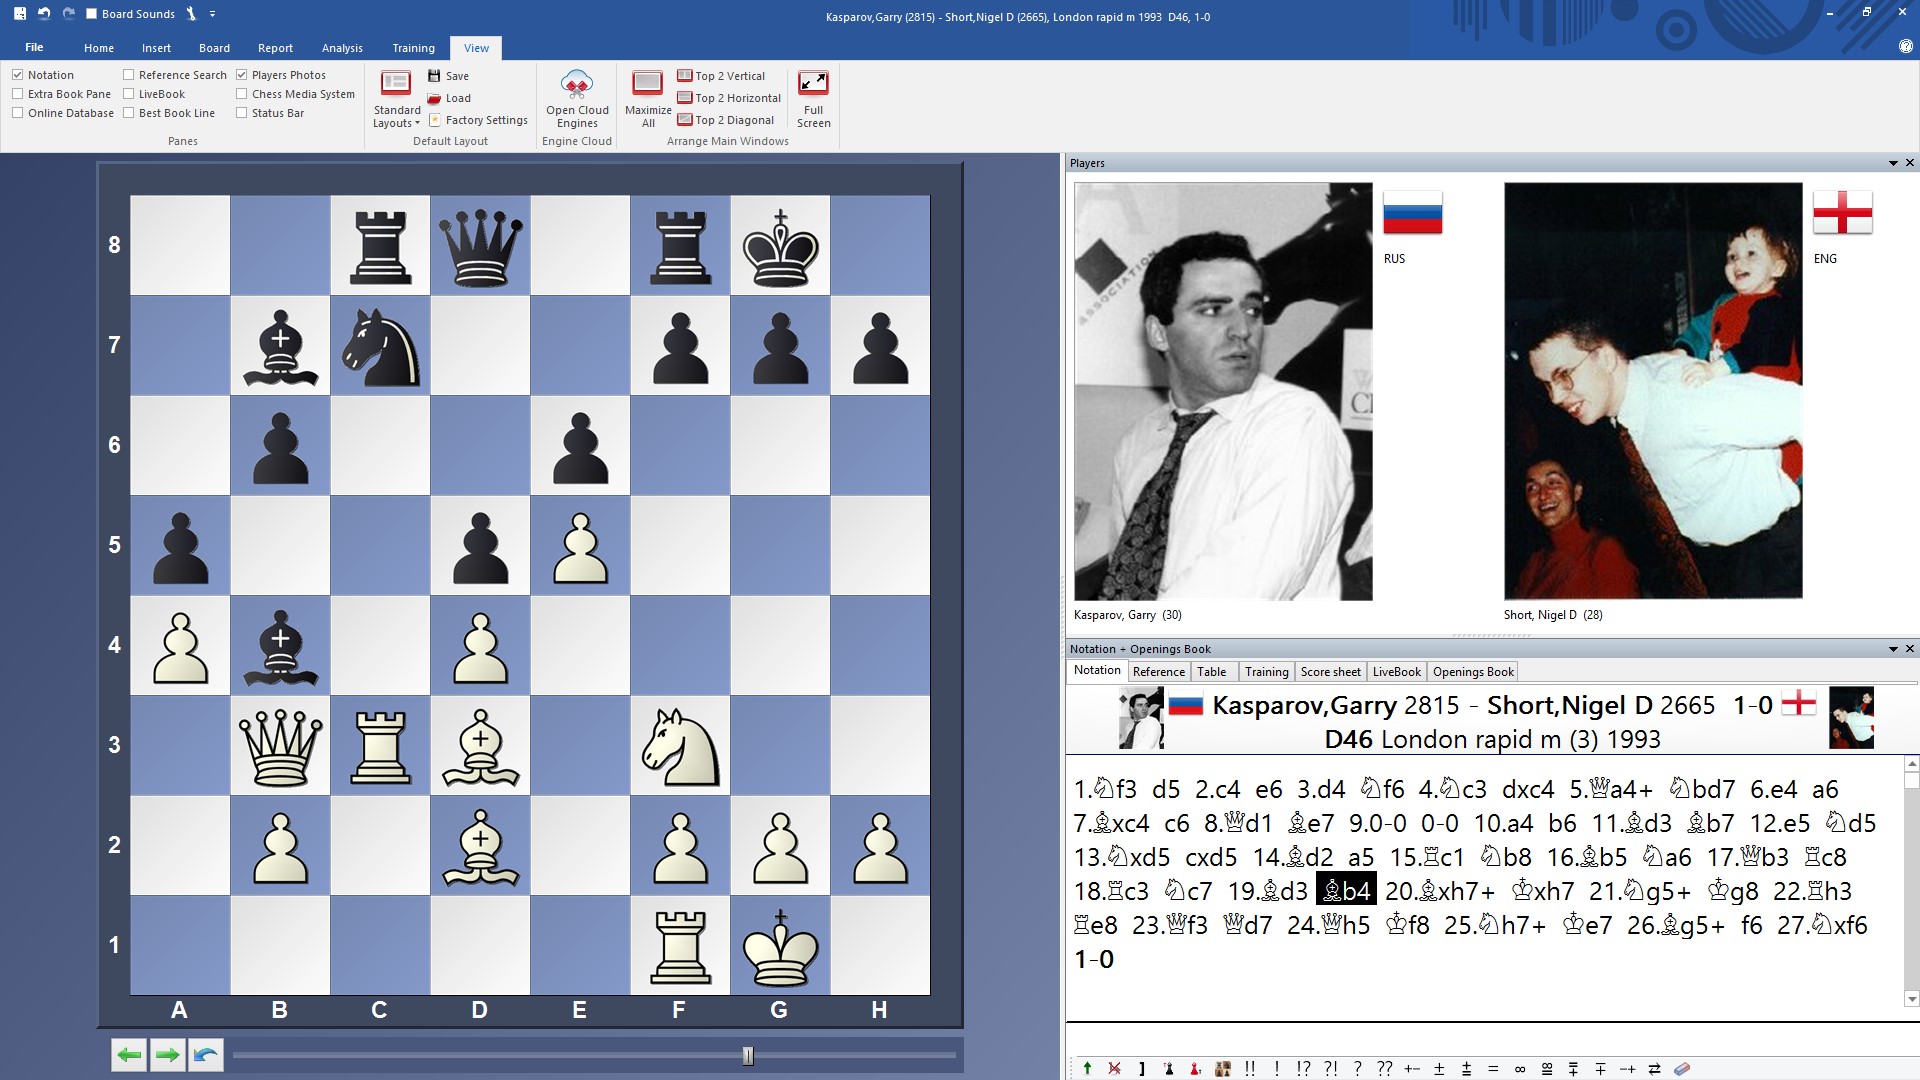 Kasparov vs Short